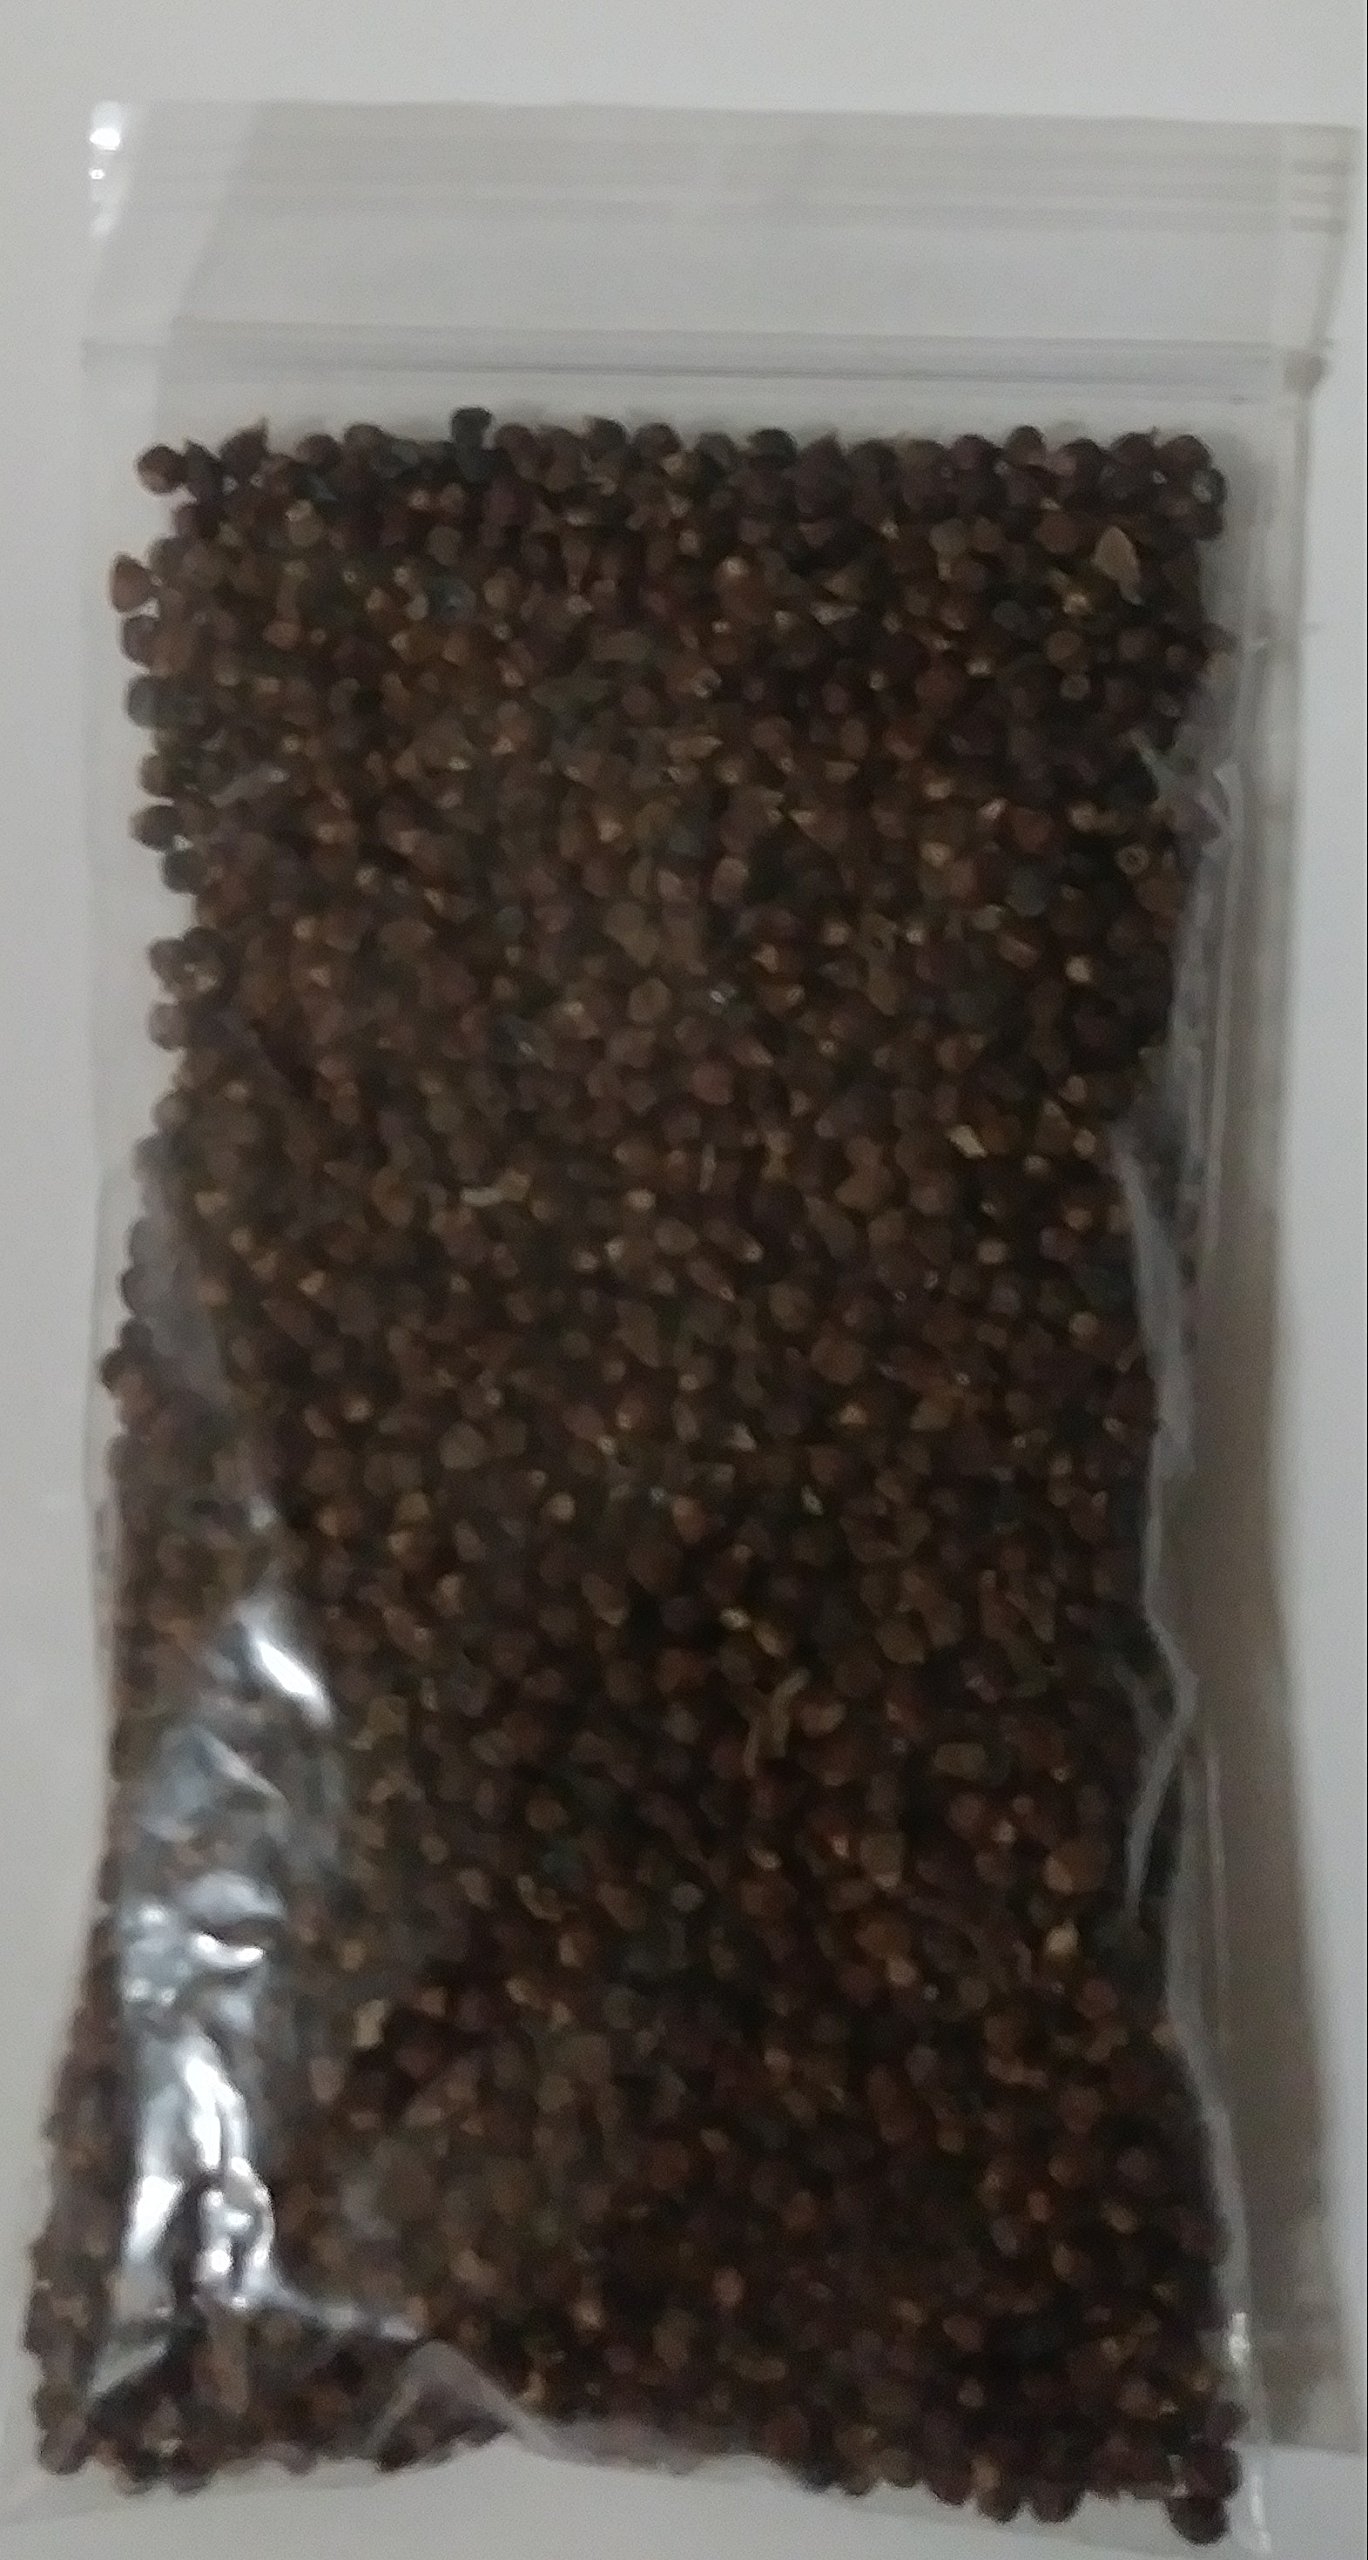 Atare de Guinea afri 2 Set Pimienta de guinea africana guinea pepper grain of paradise seeds atare genuine quality